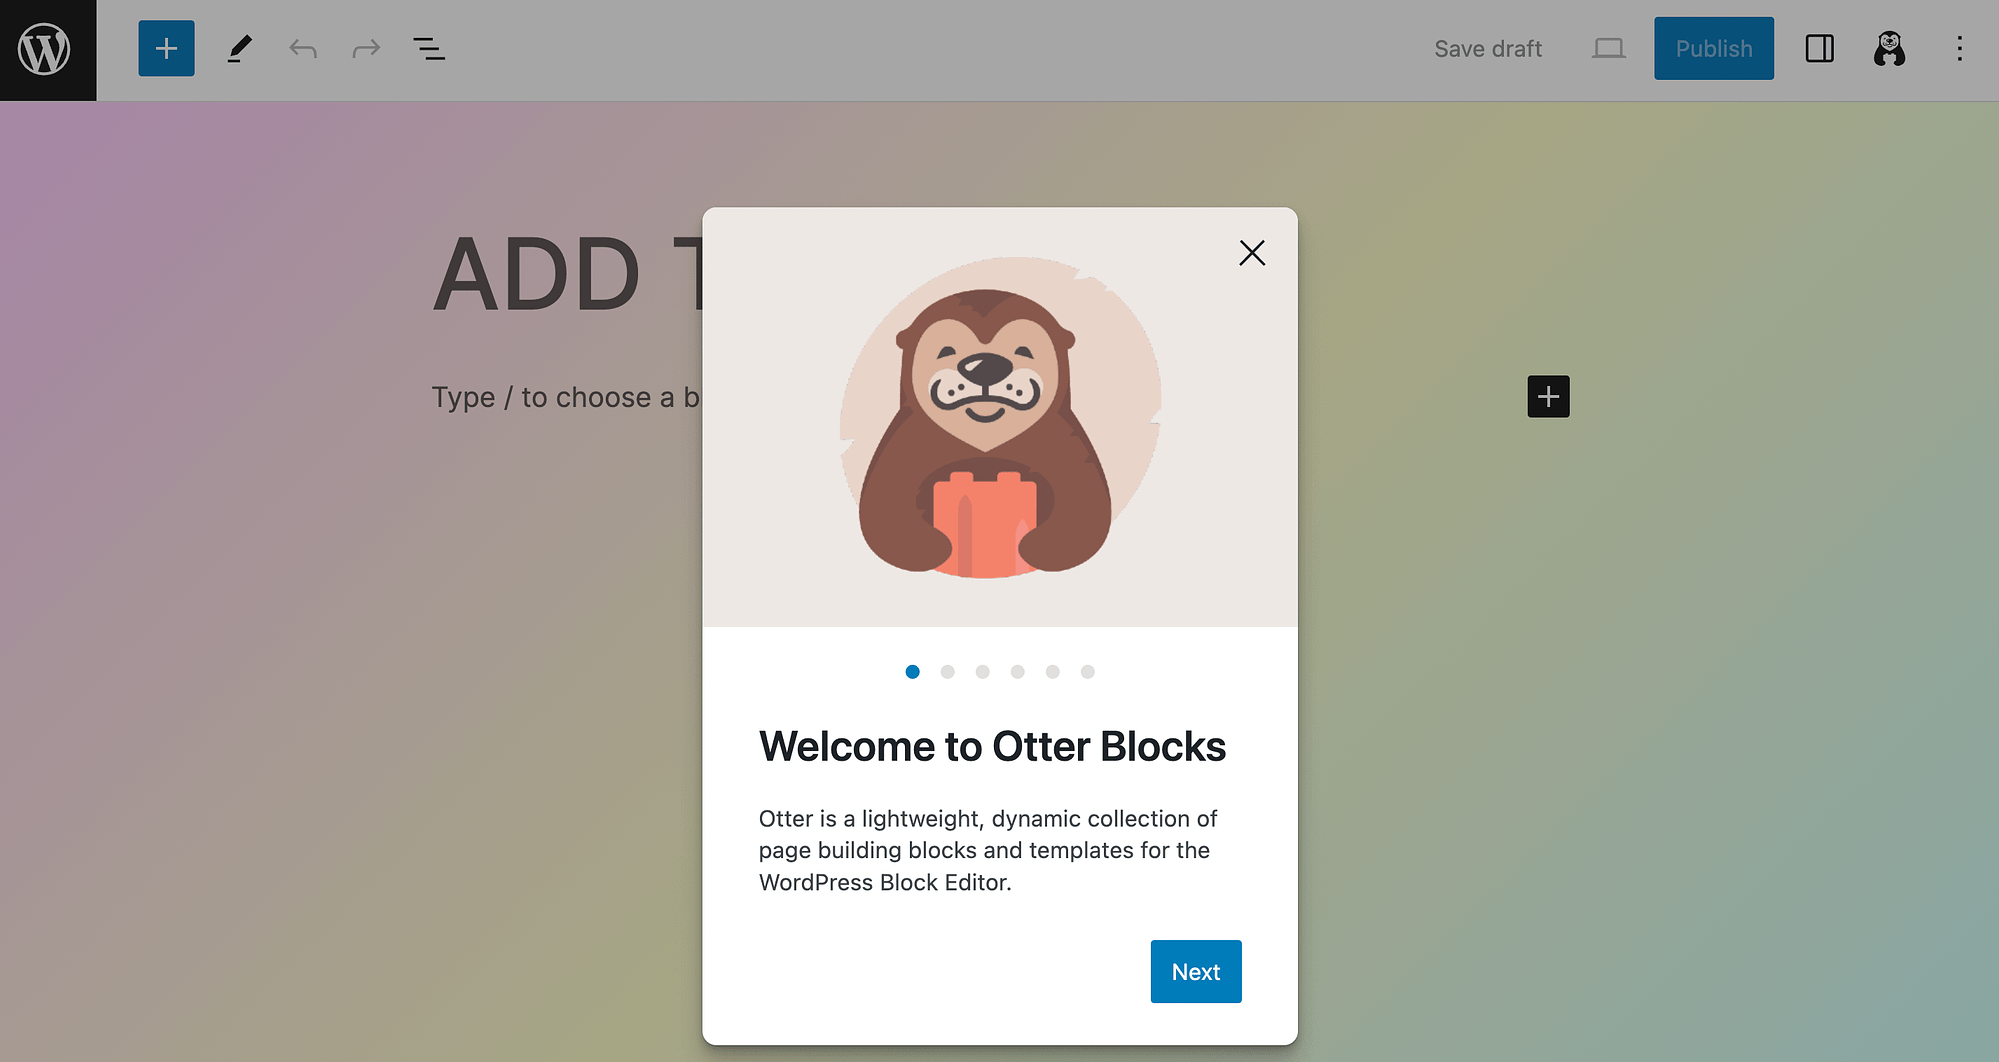 Otter Blocks welcome message in the WordPress Block Editor.